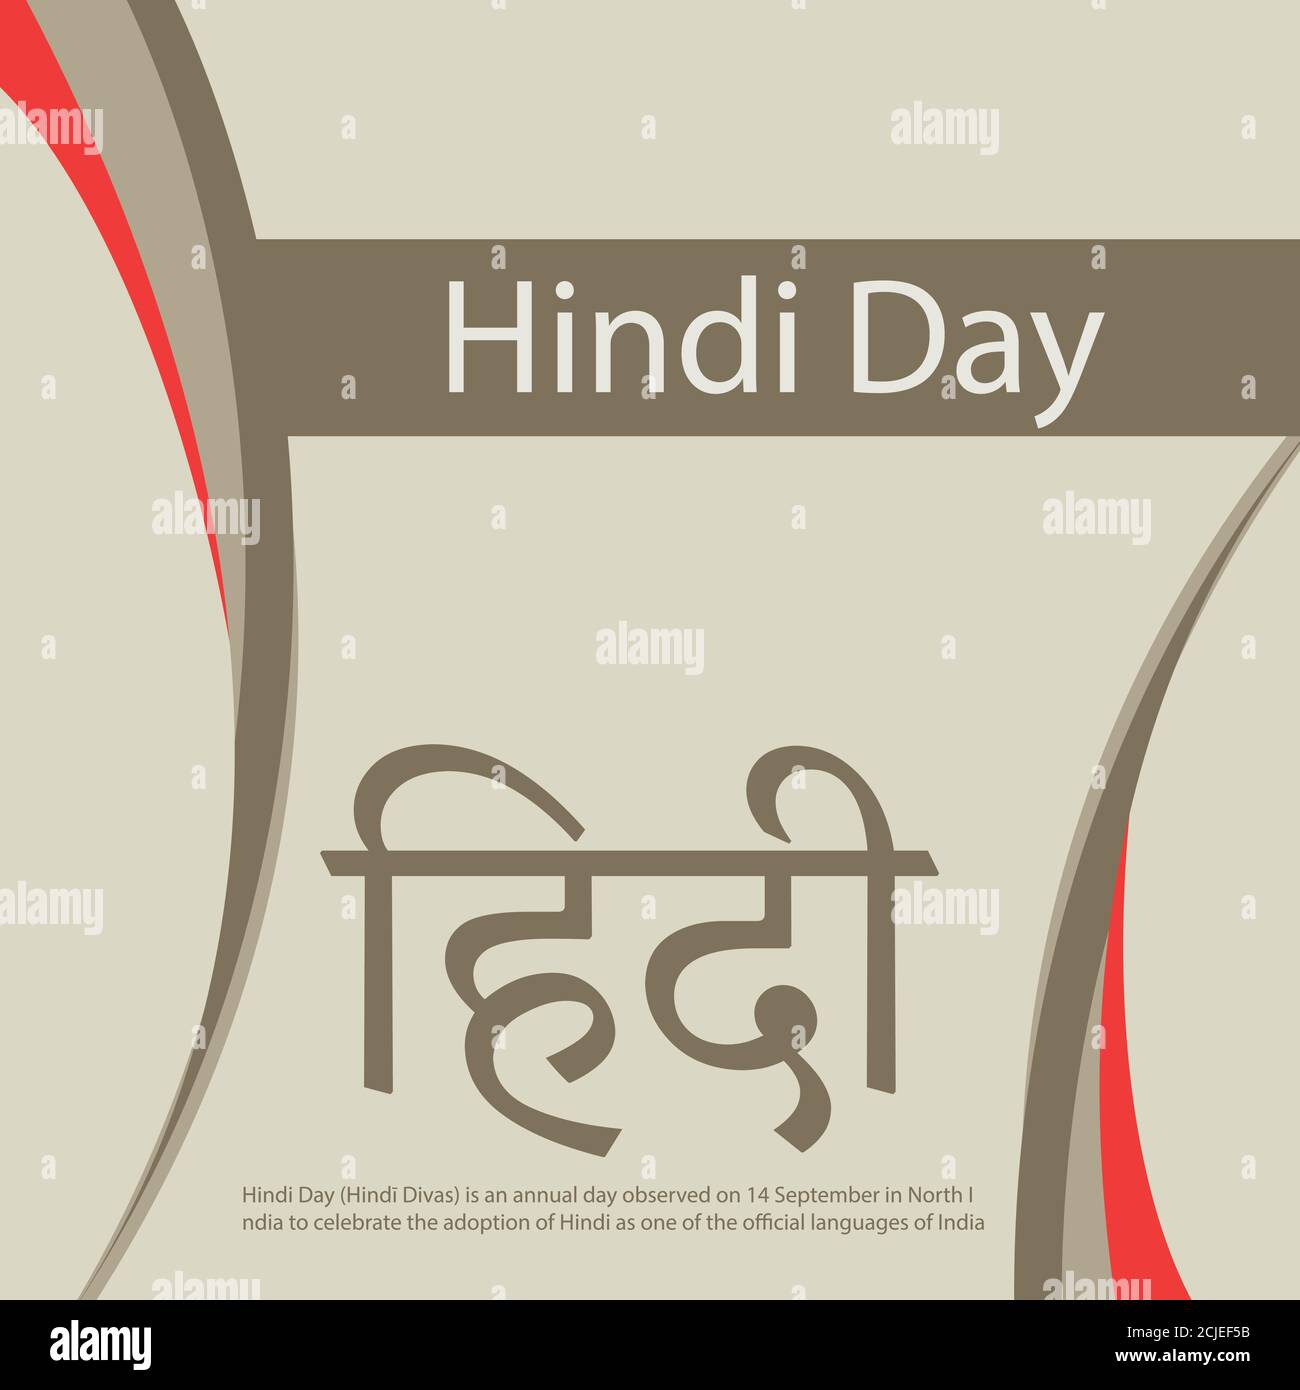 annual day in hindi